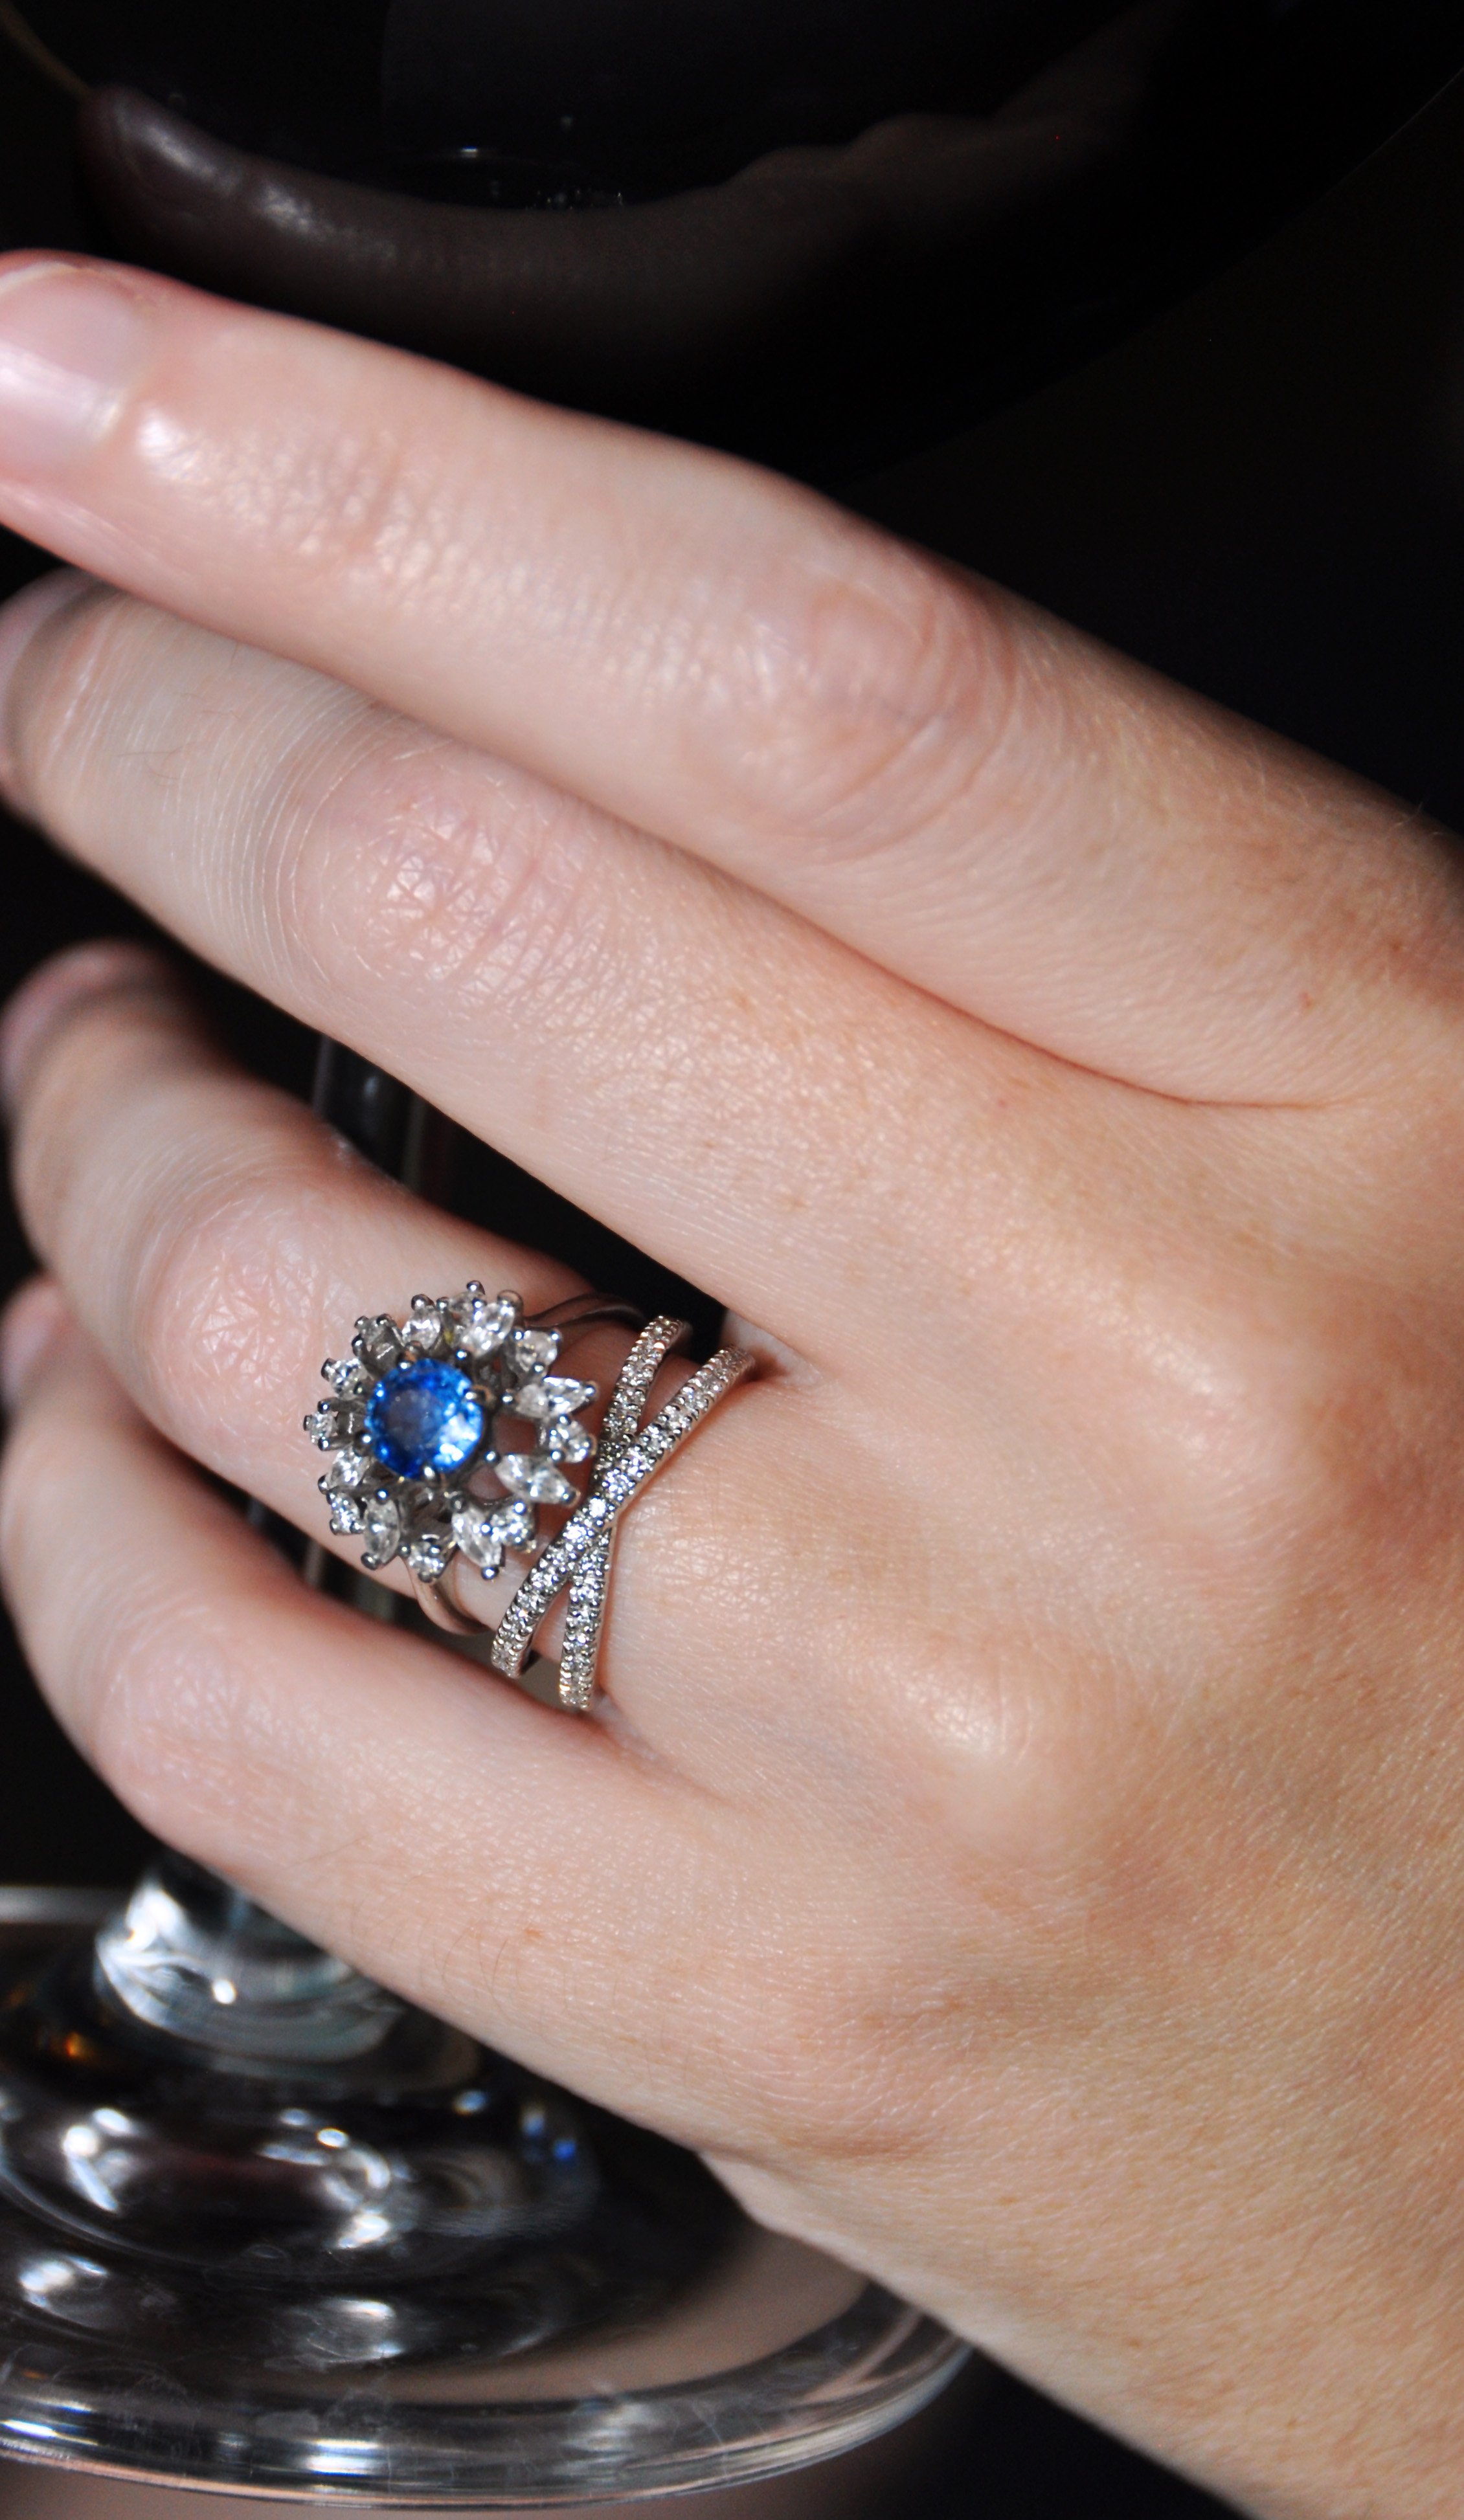 sapphire wedding rings